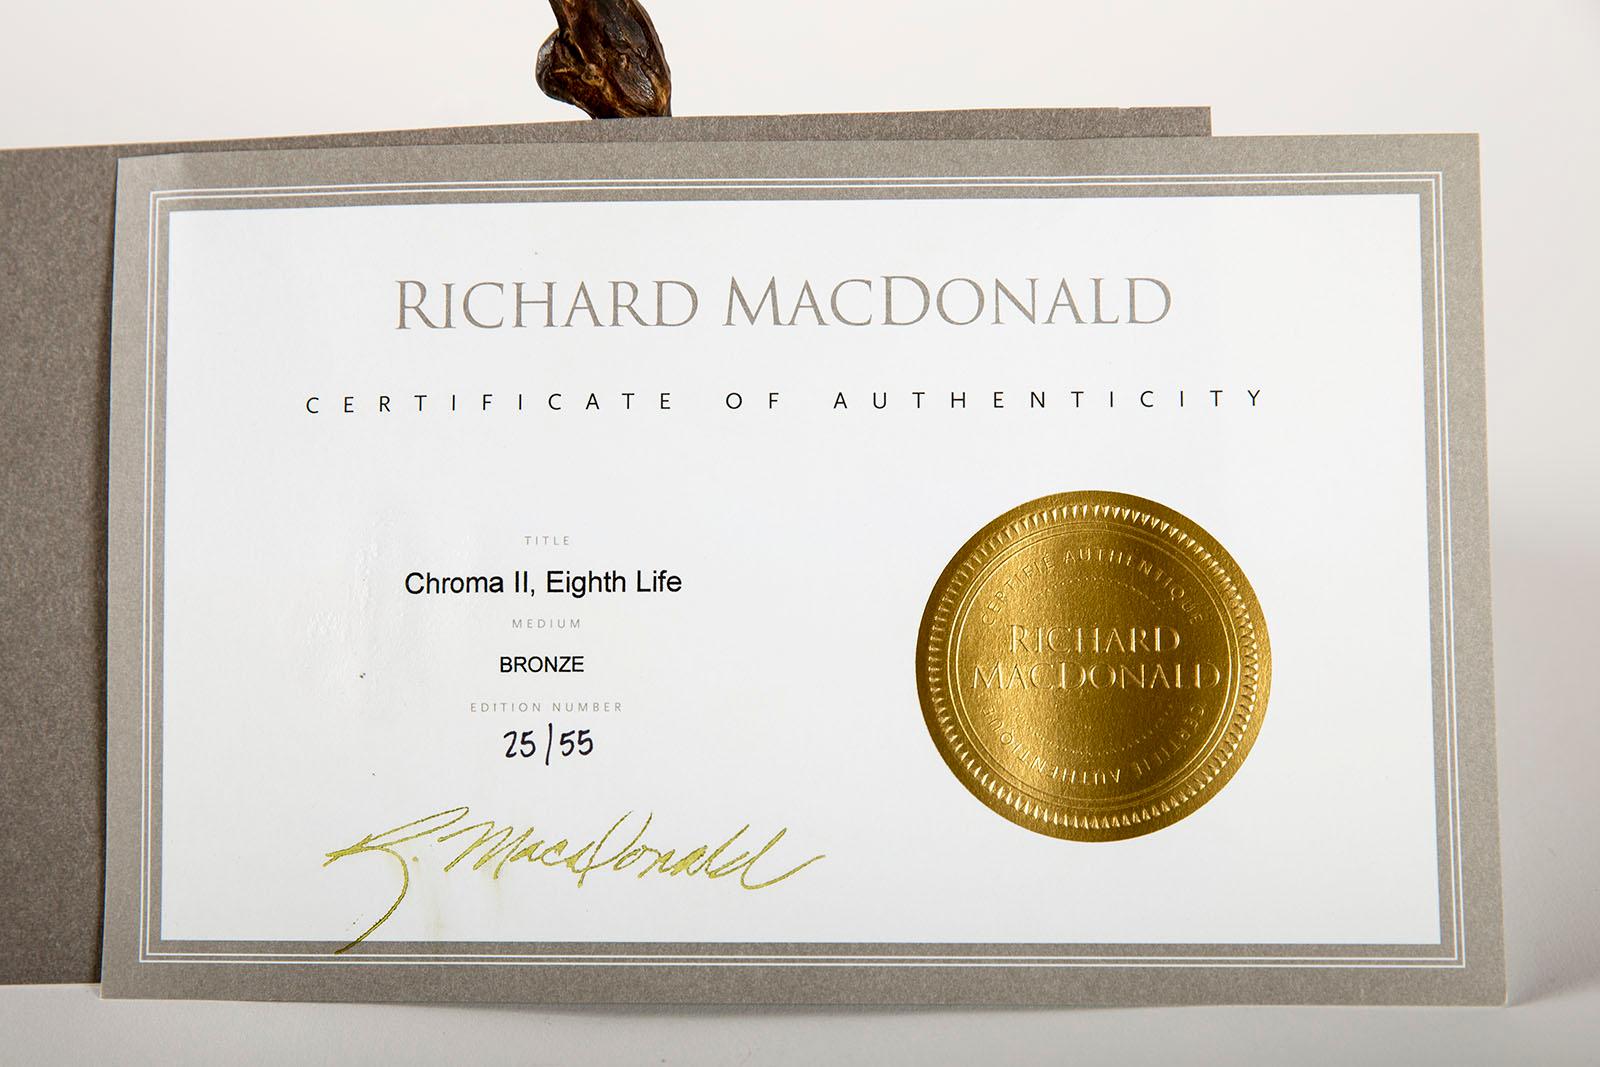 Richard Macdonald Chroma II bonze 1/8 life sculpture For Sale 8